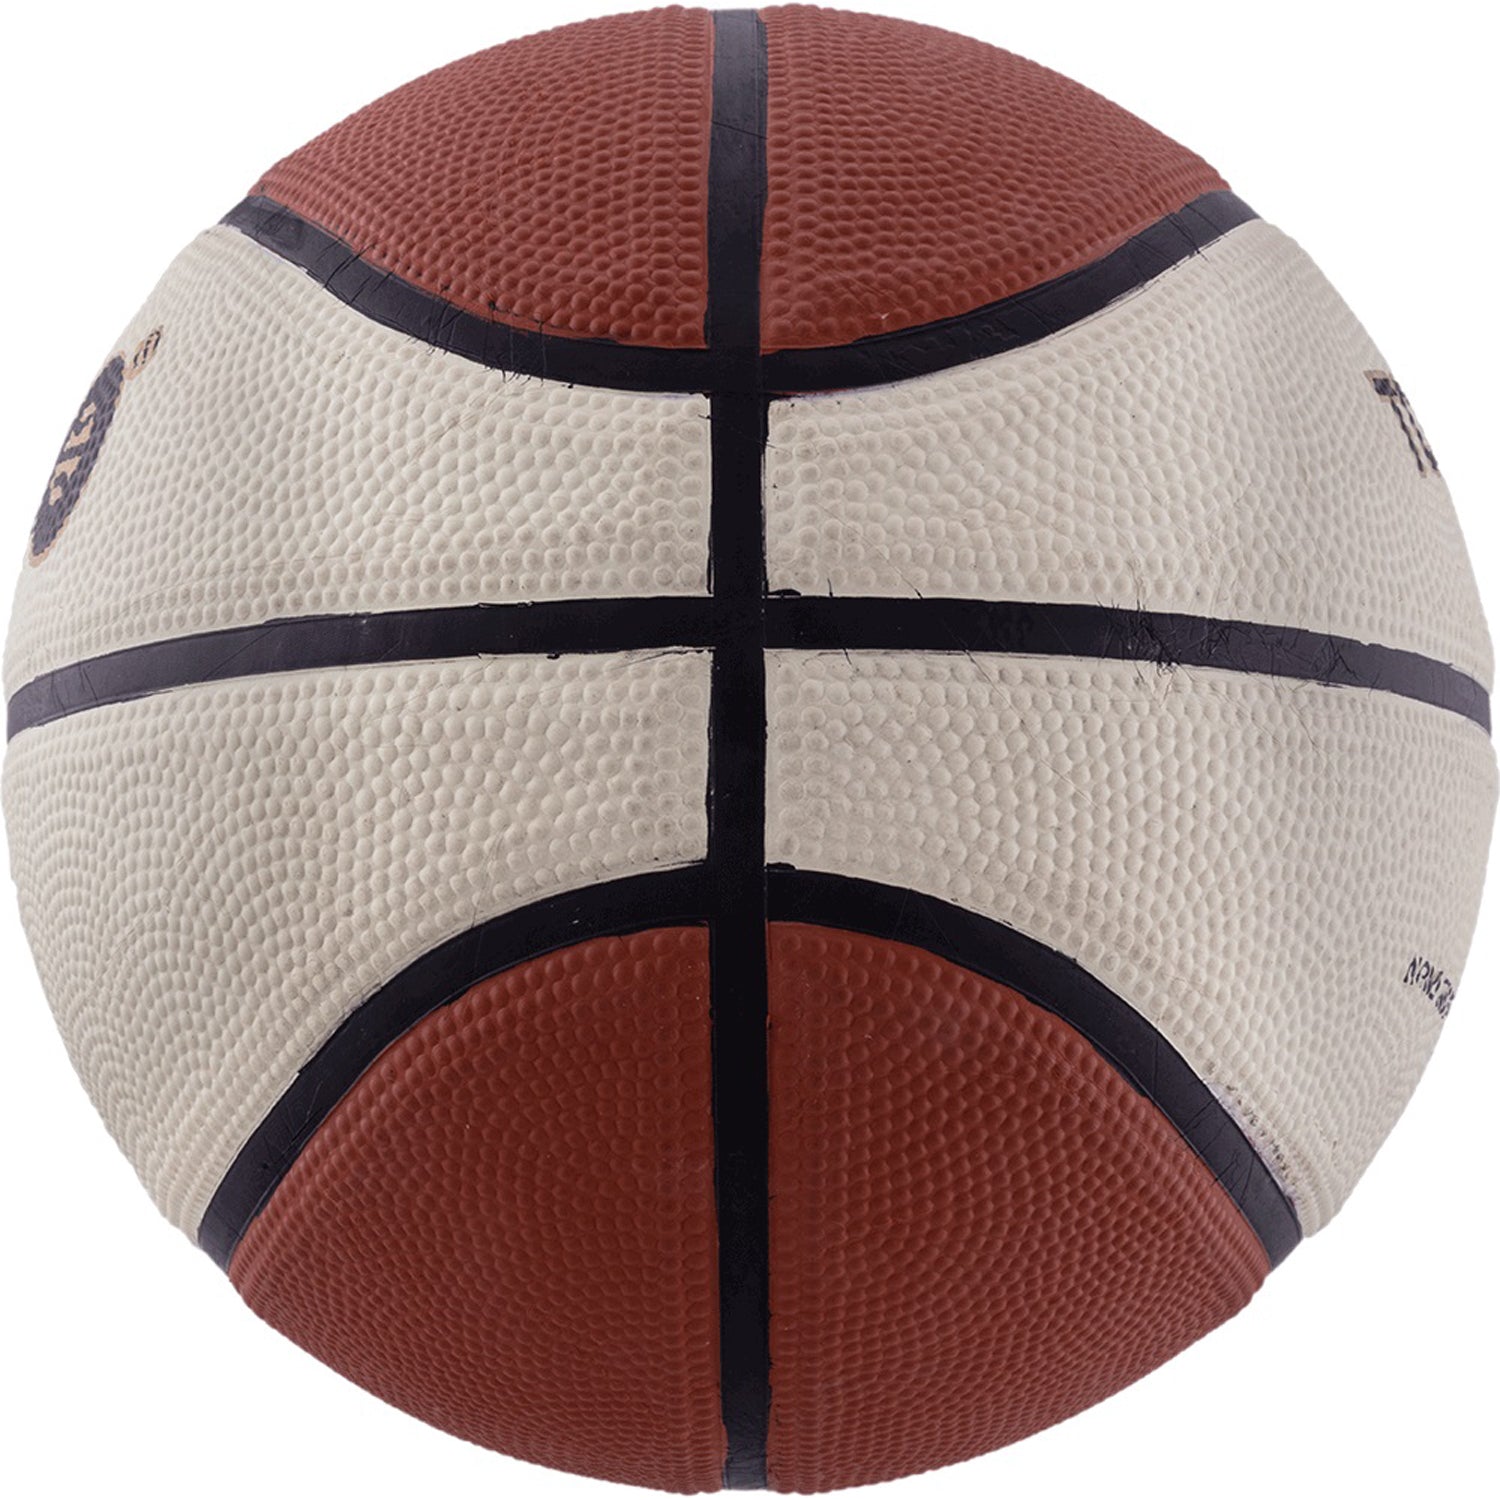 Cosco 13003 Tournament Basket Ball, Size 7 - Best Price online Prokicksports.com